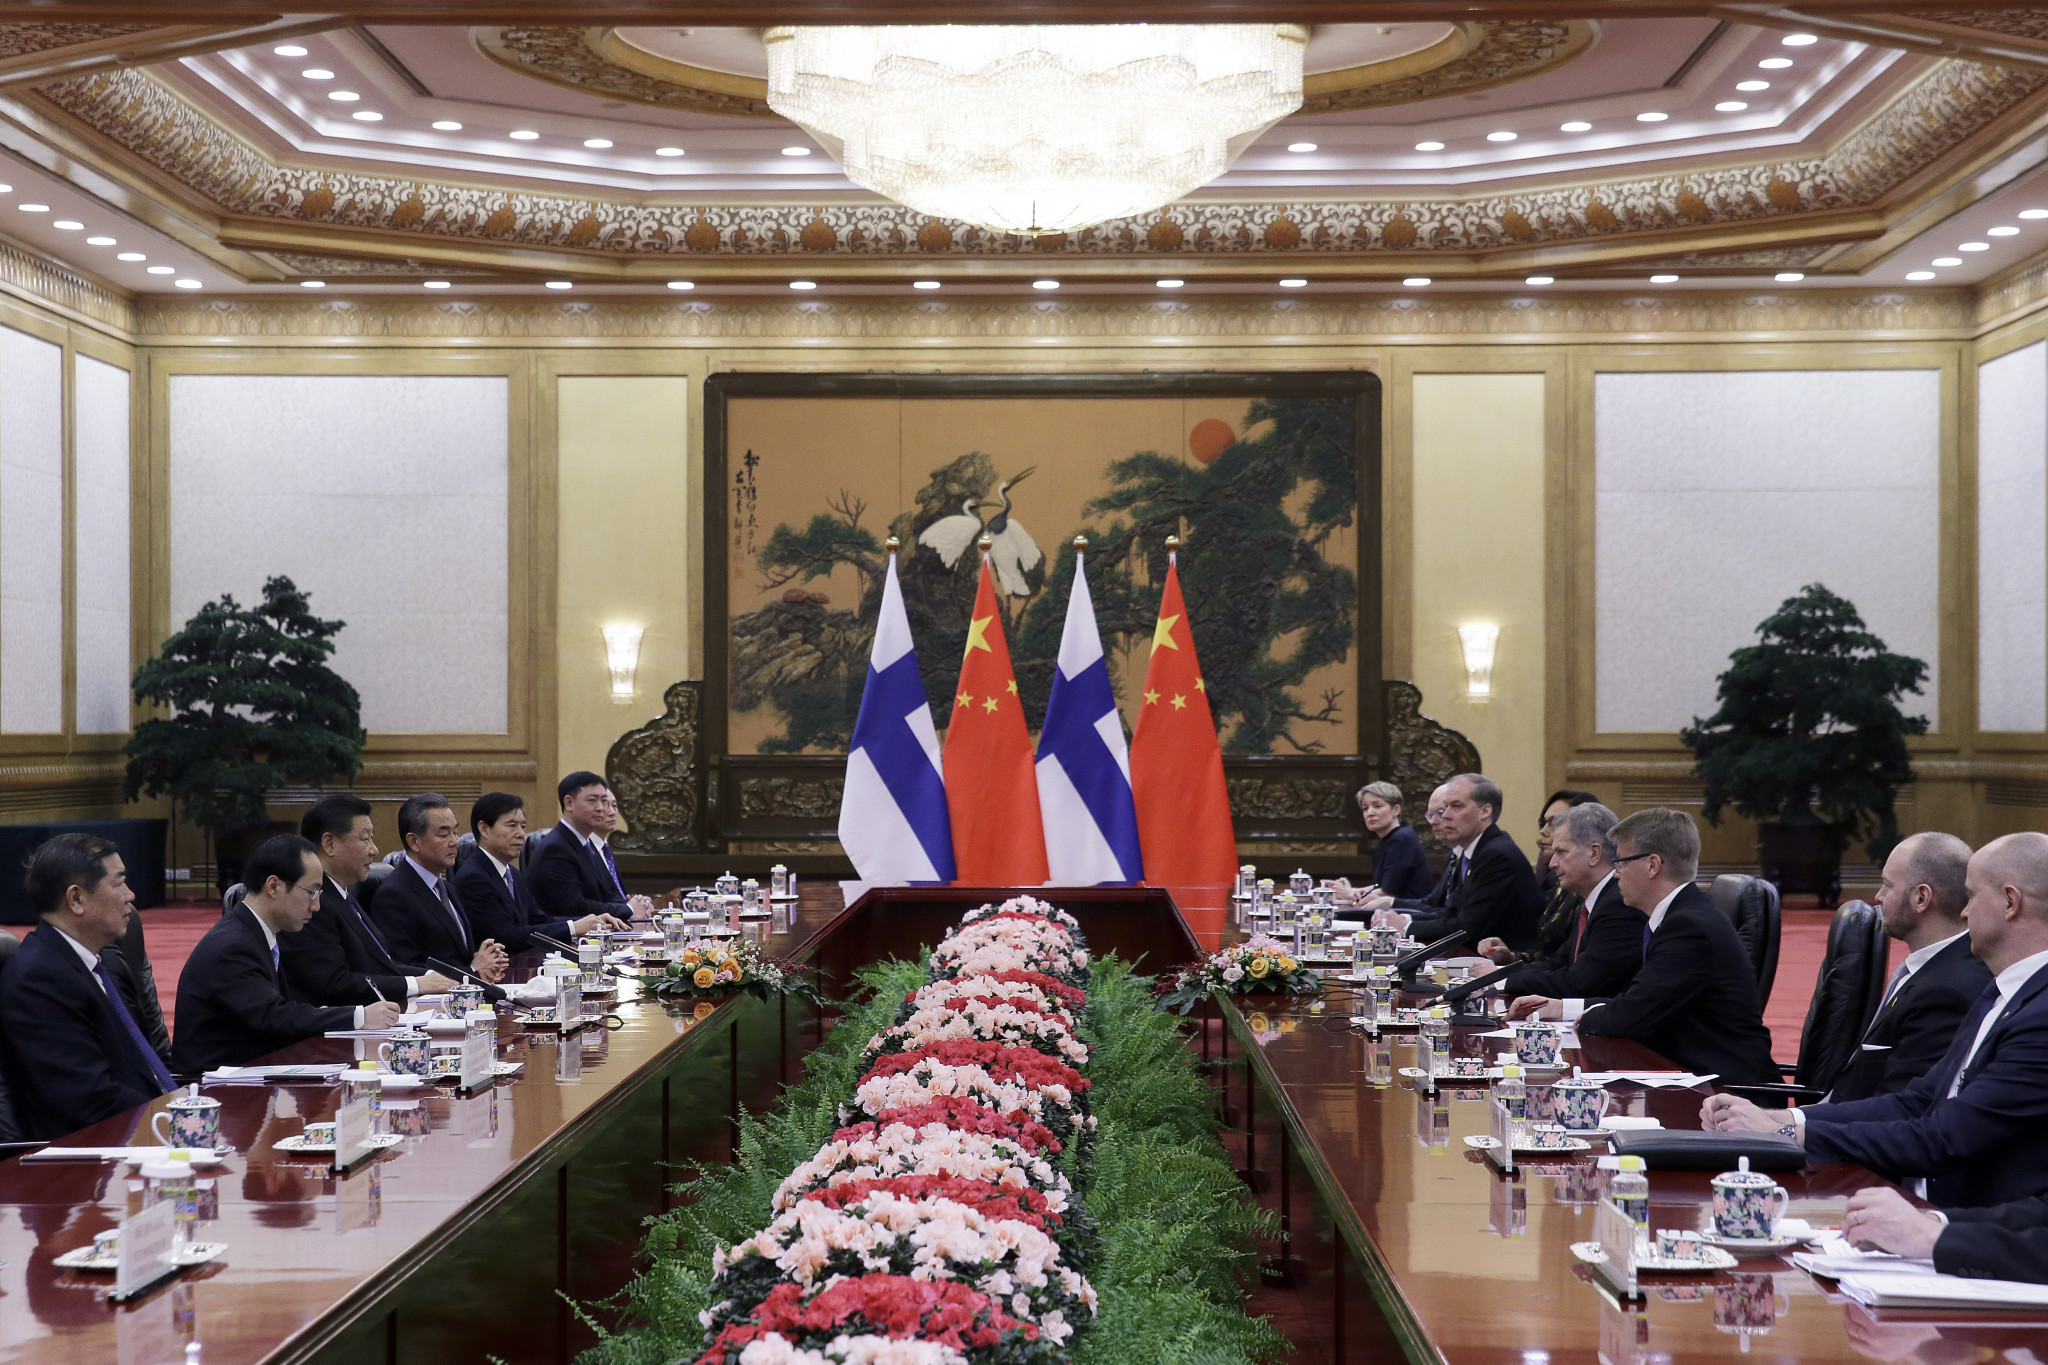 Finnish President Sauli Niinistö visited Beijing this week ©Getty Images